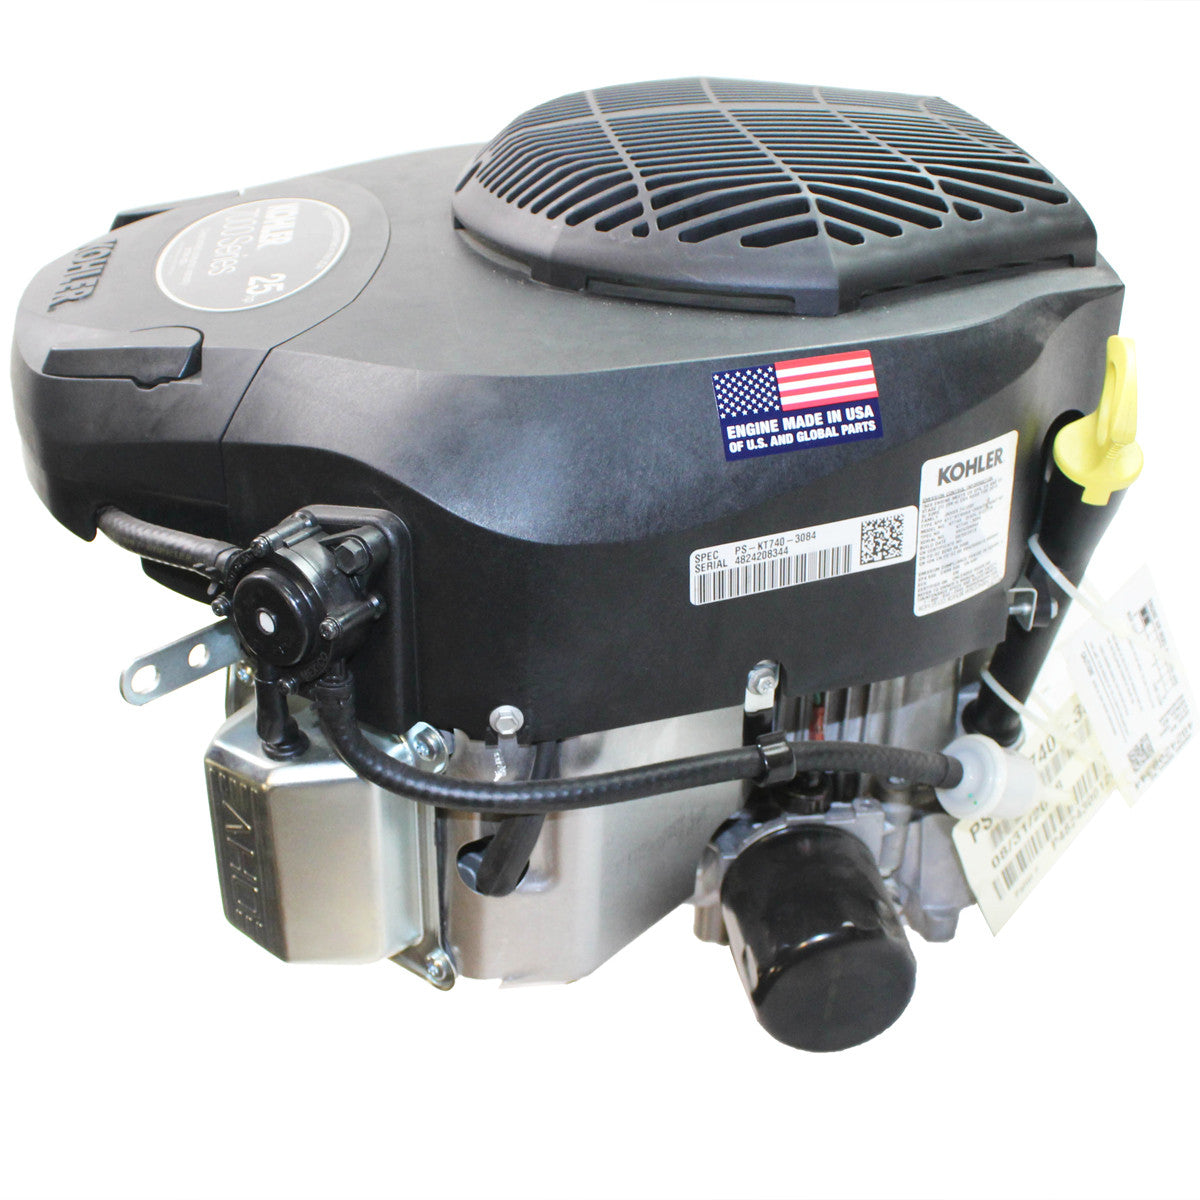 Kohler 7000 Series 25HP Replacement Engine #KT740-3084